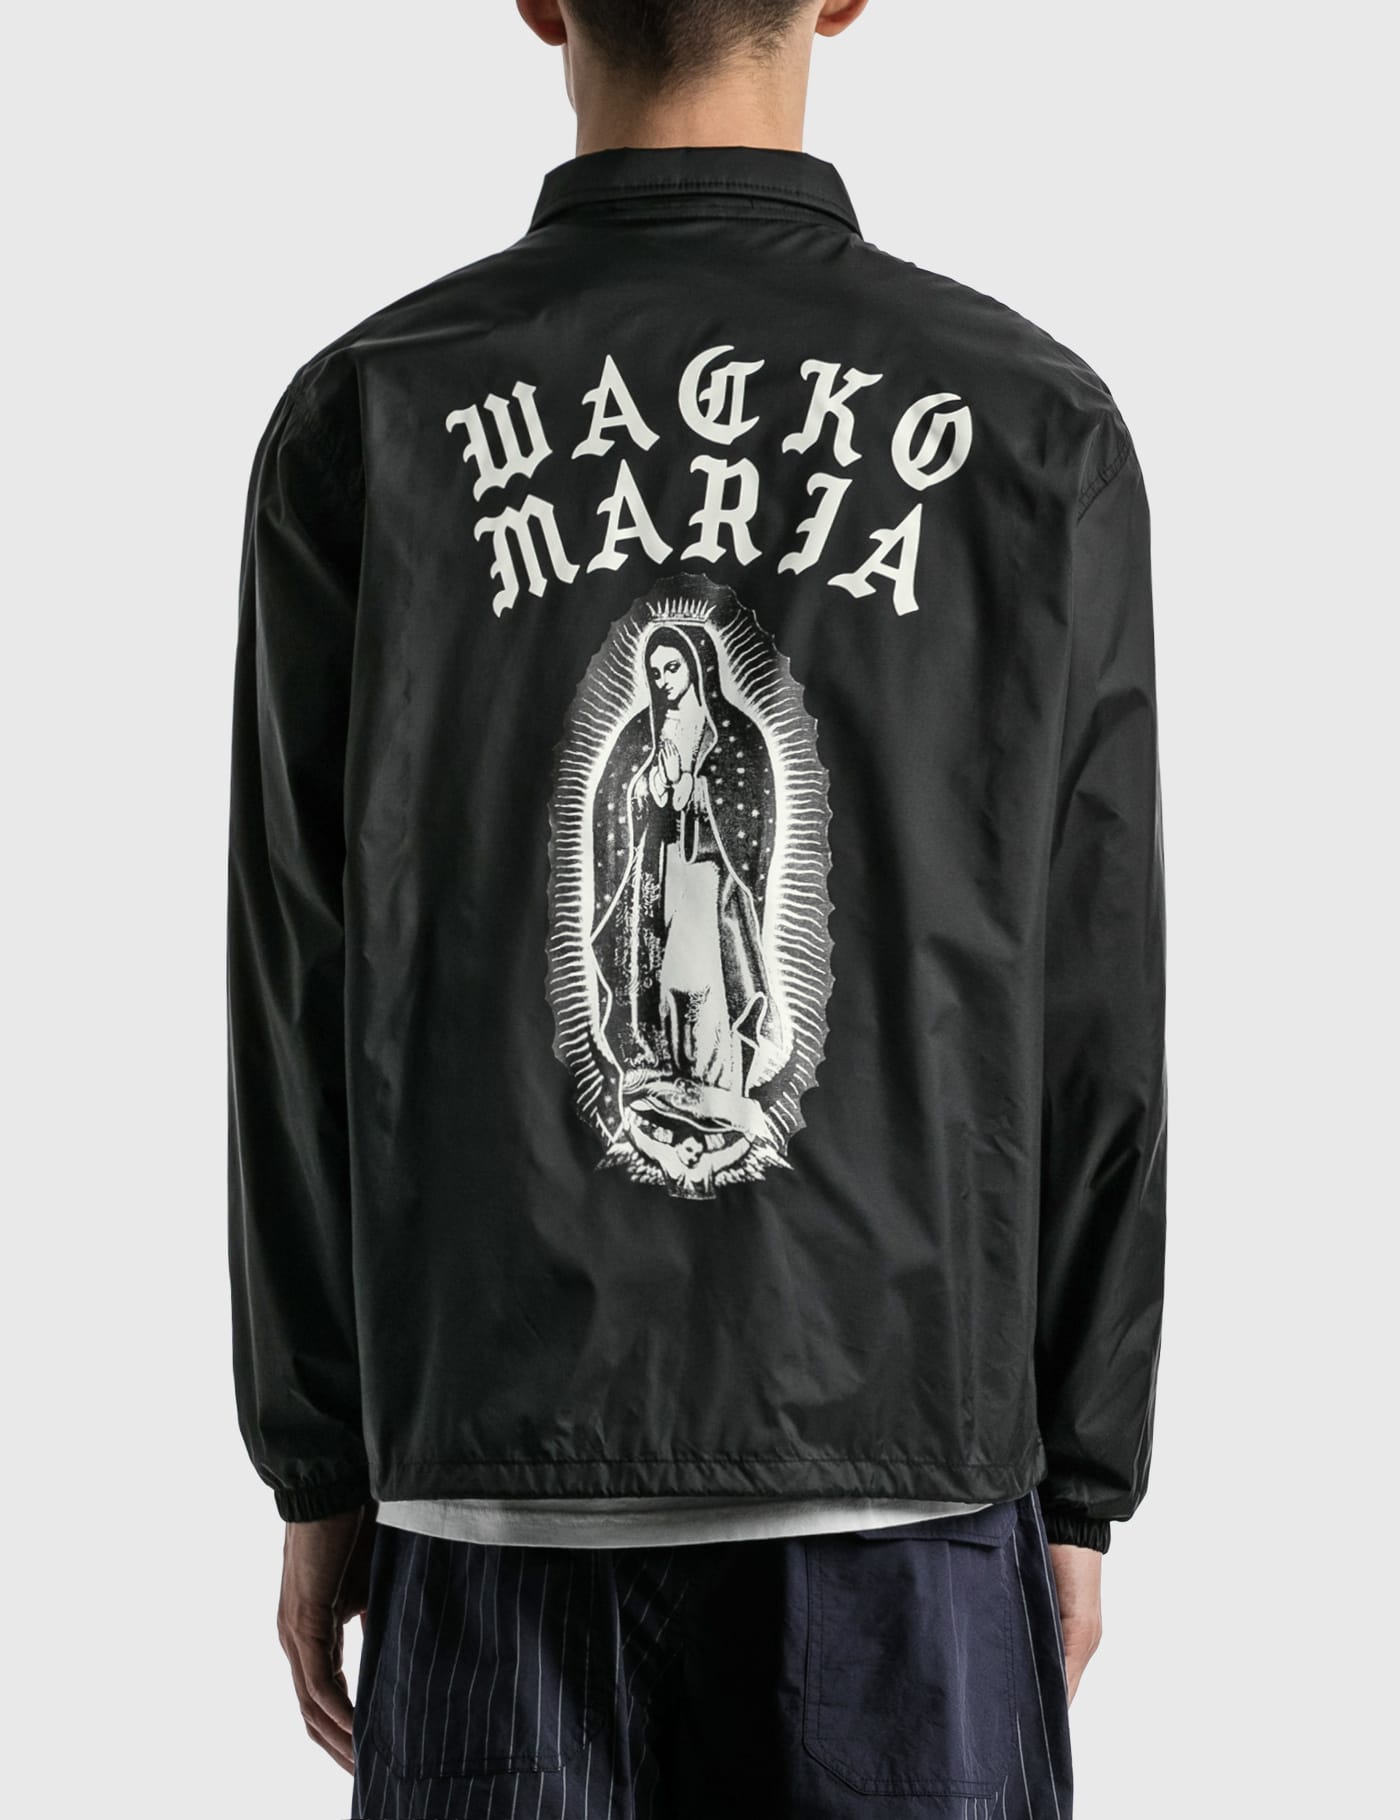 Wacko Maria - Coach Jacket | HBX - Globally Curated Fashion and